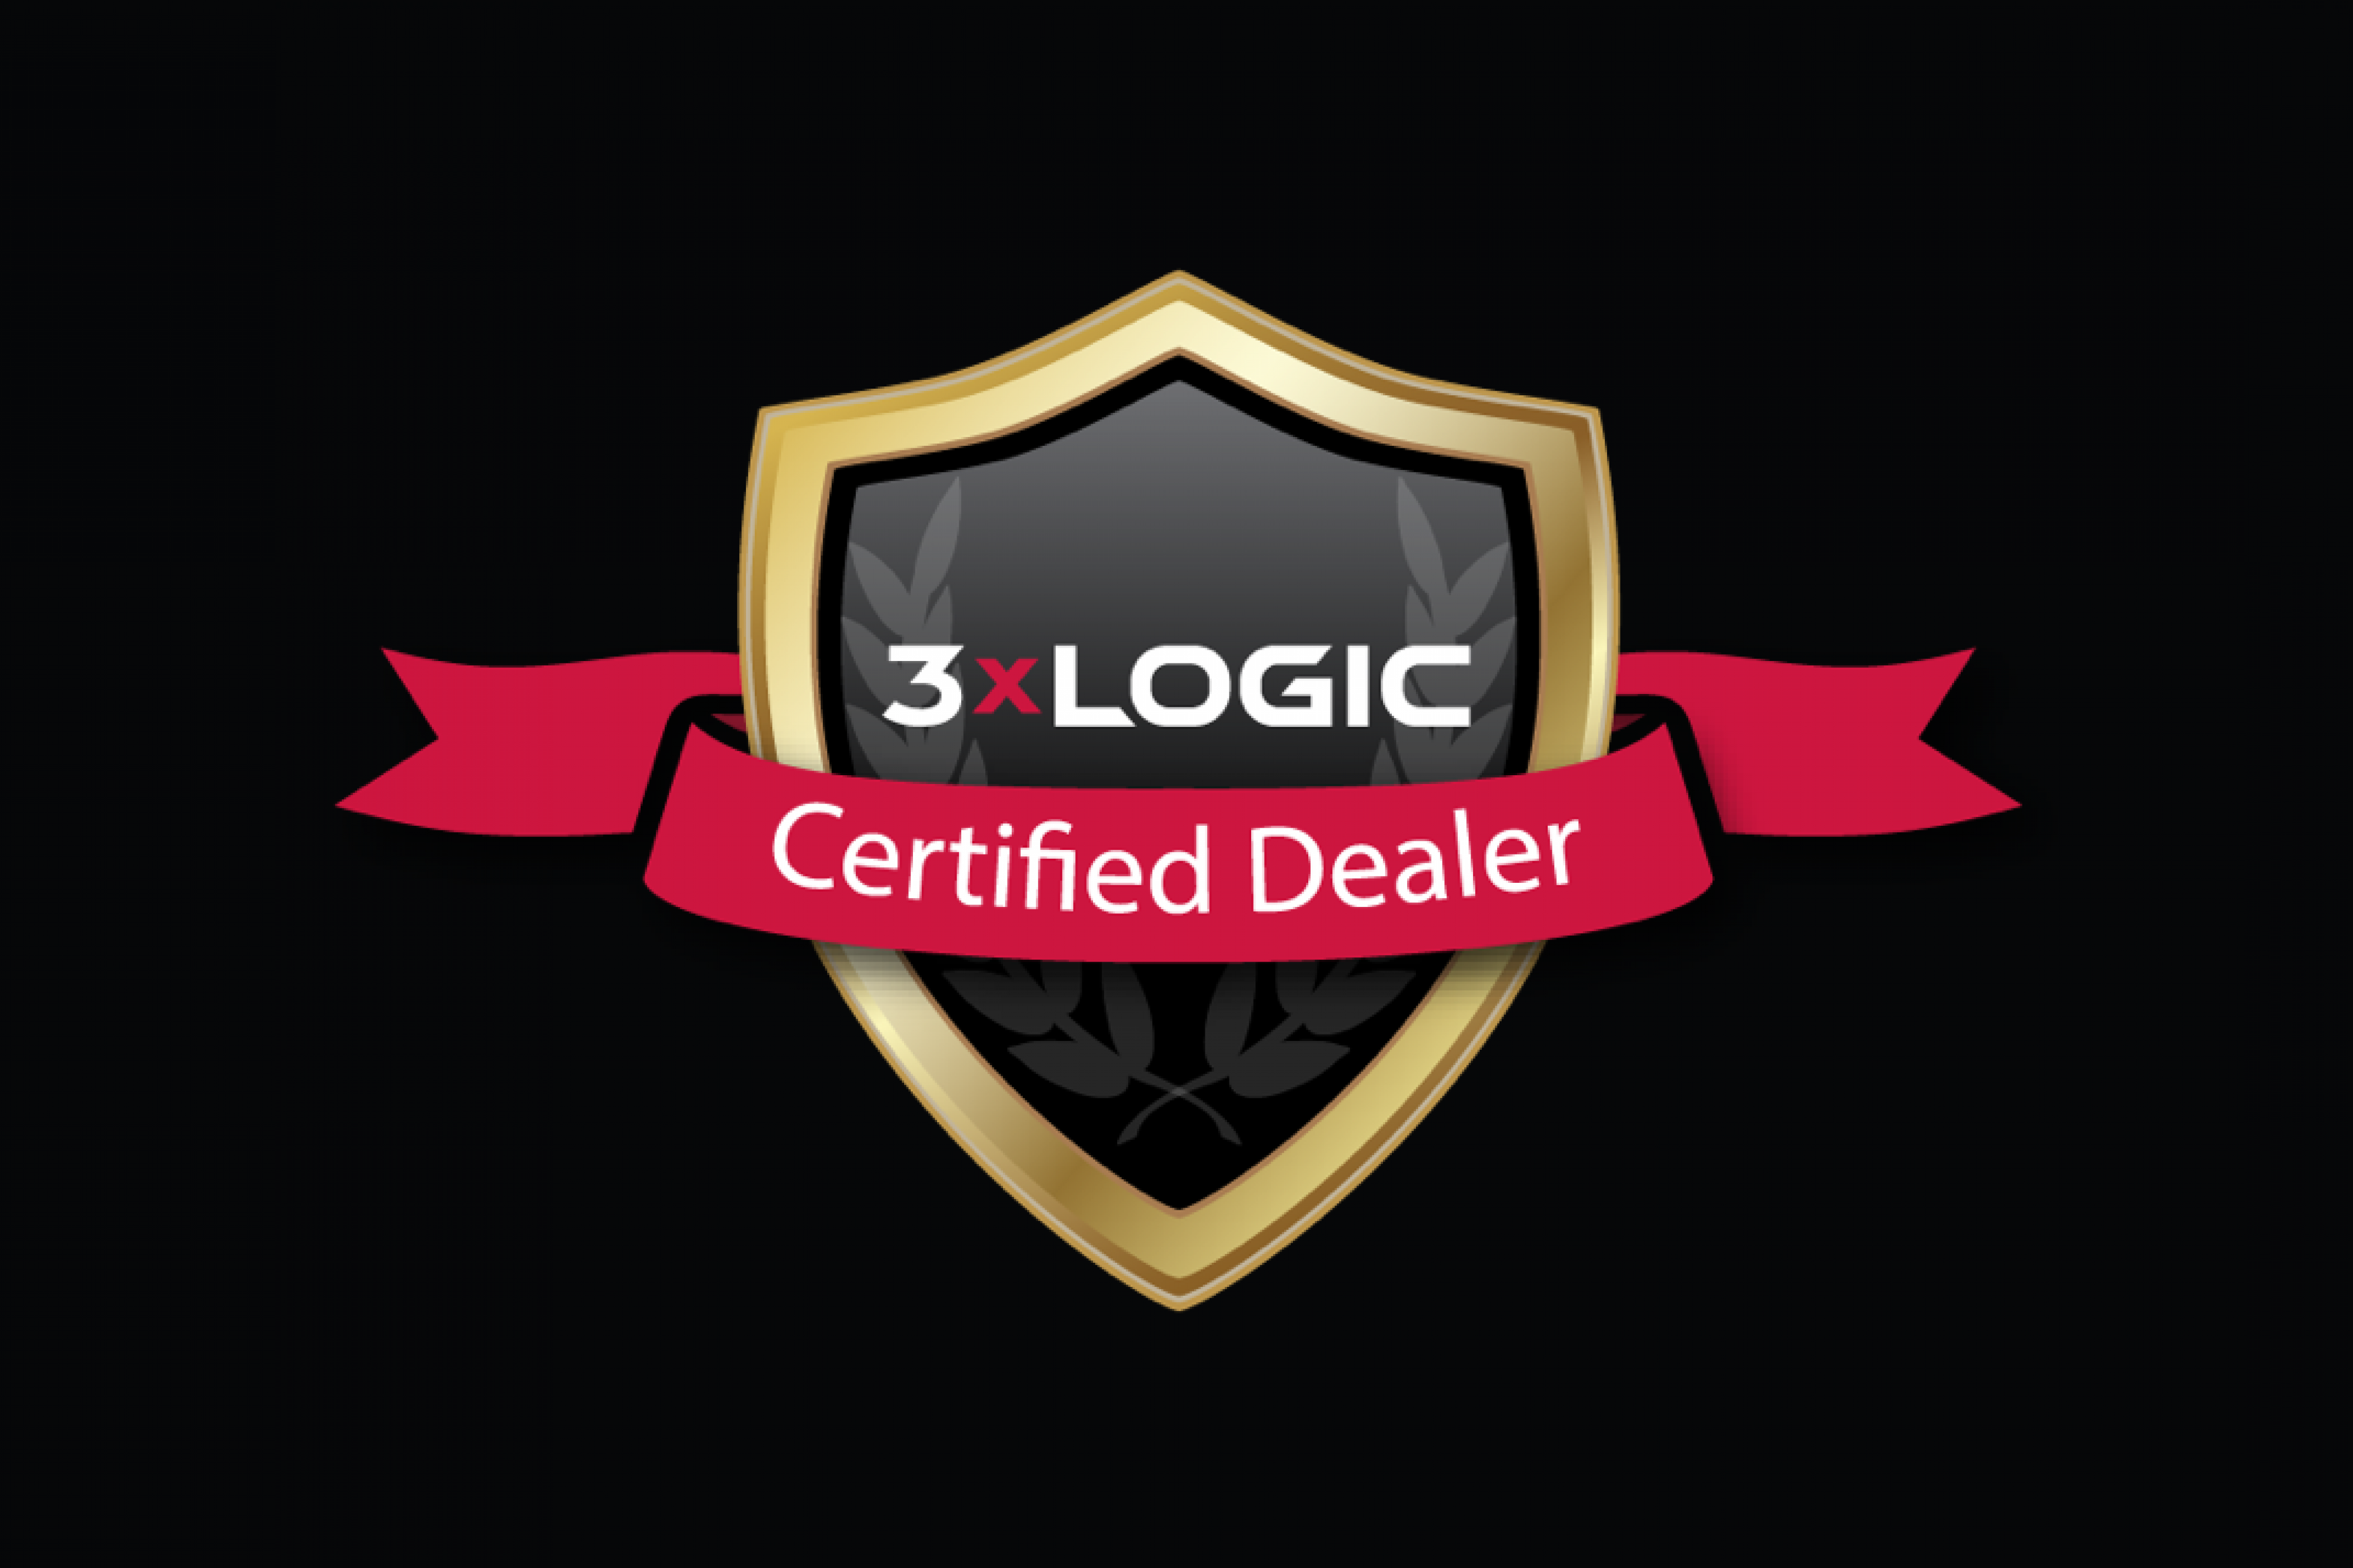 3xLOGIC Certified Dealer graphic.